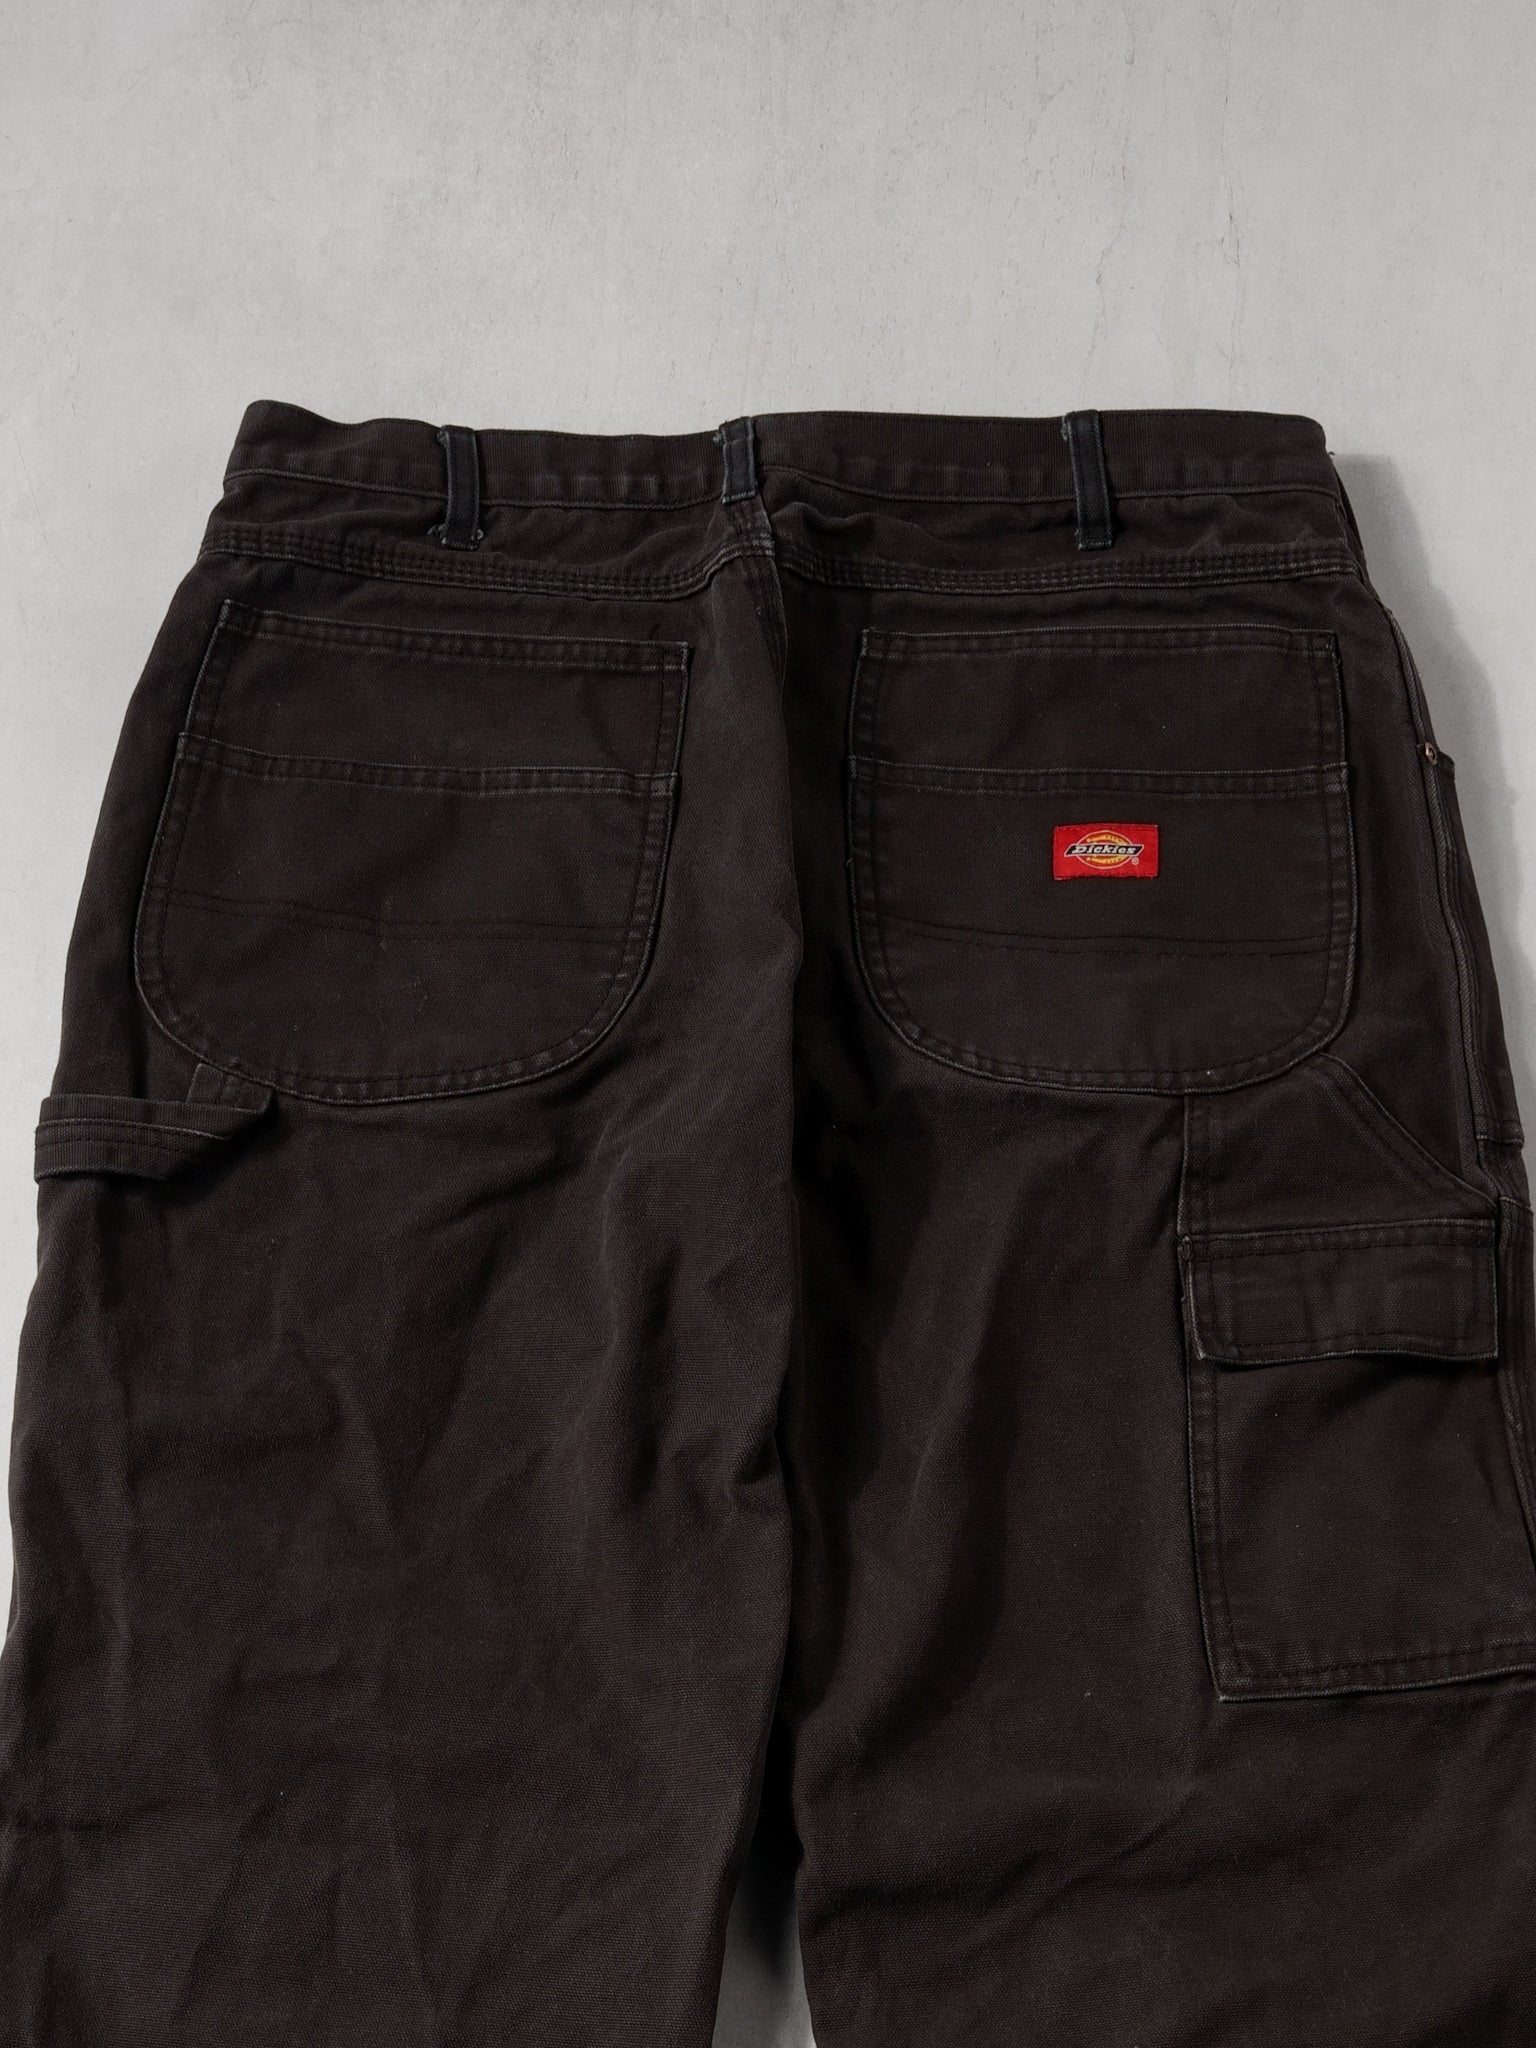 Vintage 90s Washed Black Dickies Double Knee Carpenter Pants (36x30)